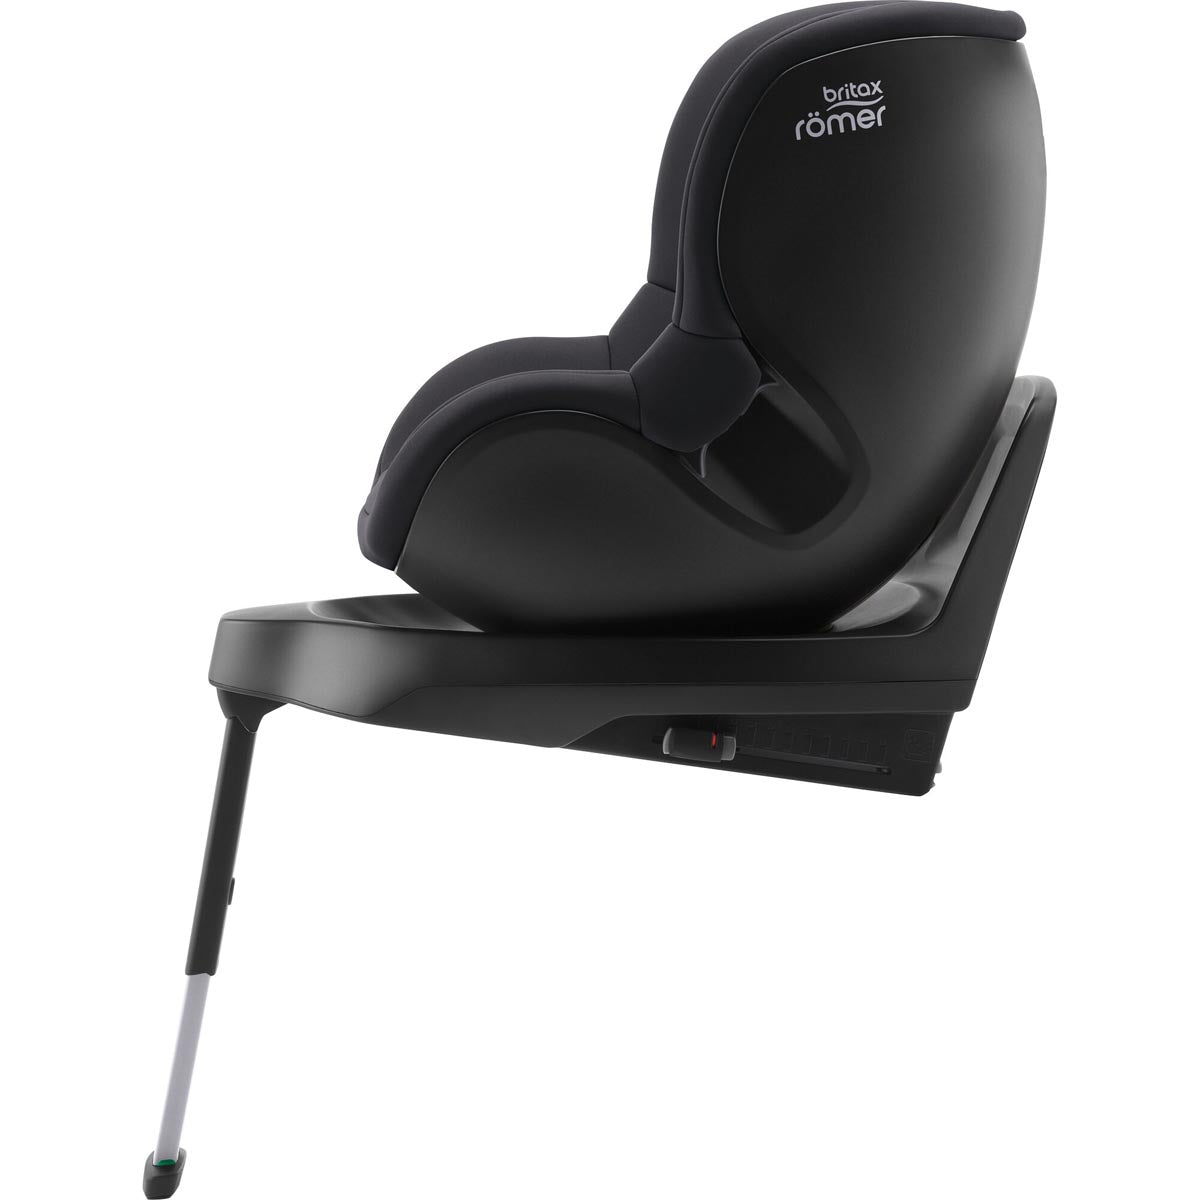 Britax Roemer Dualfix Plus 汽車座椅 (R129 I-size) (初生至4歲) (產地中國)